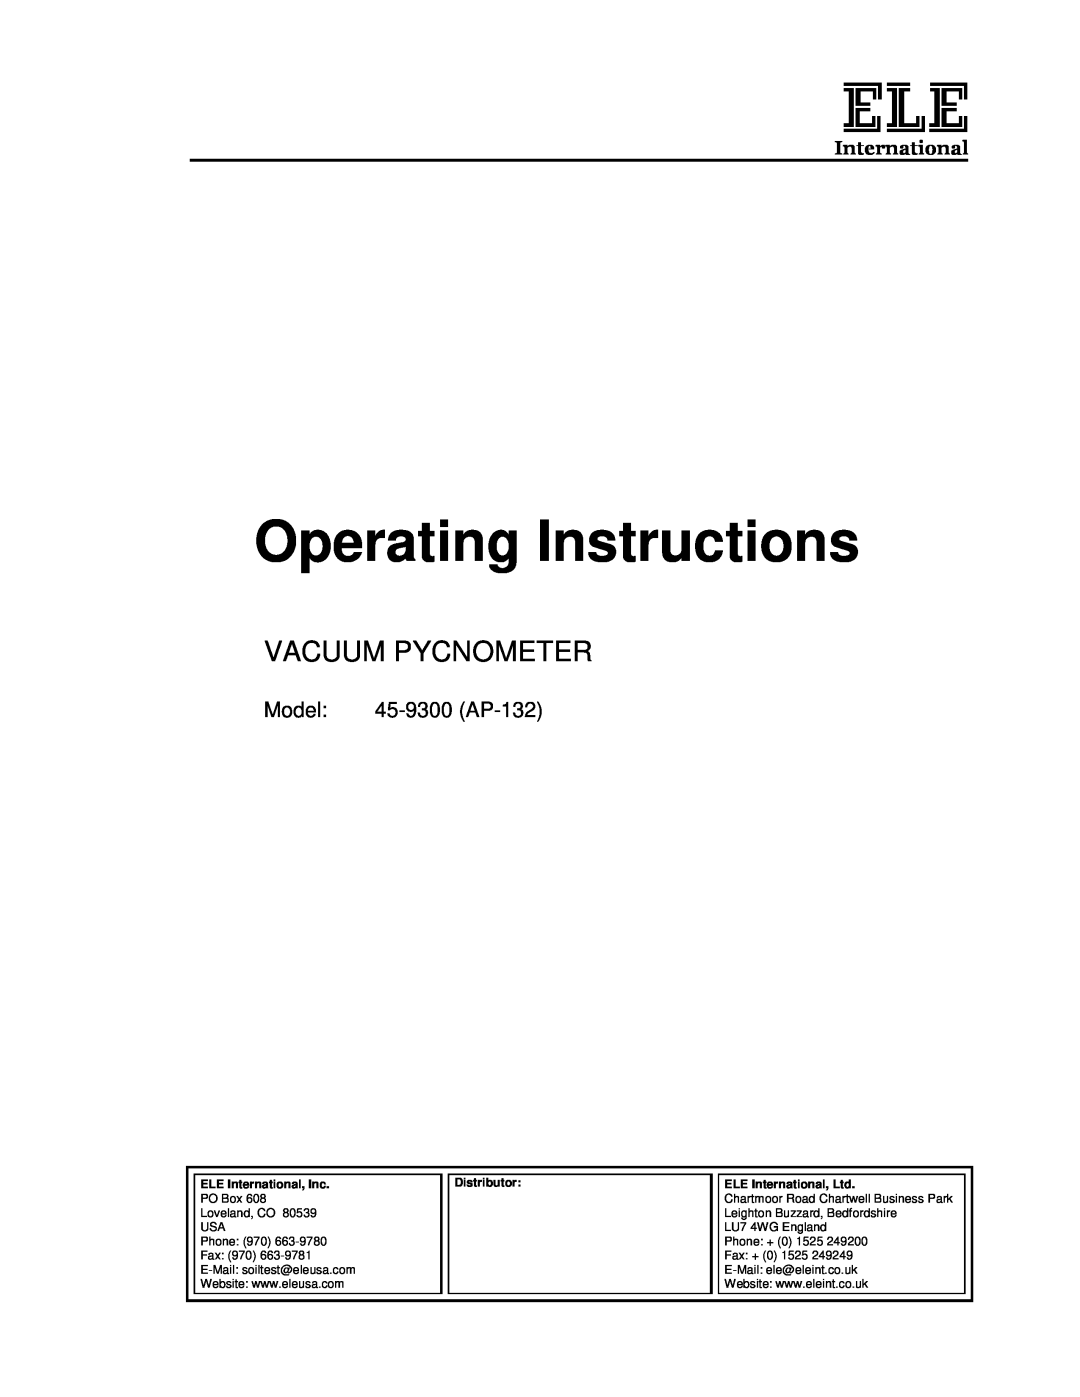 Ele 45-9300 manual Operating Instructions, Vacuum Pycnometer, ELE International, Inc, Distributor 